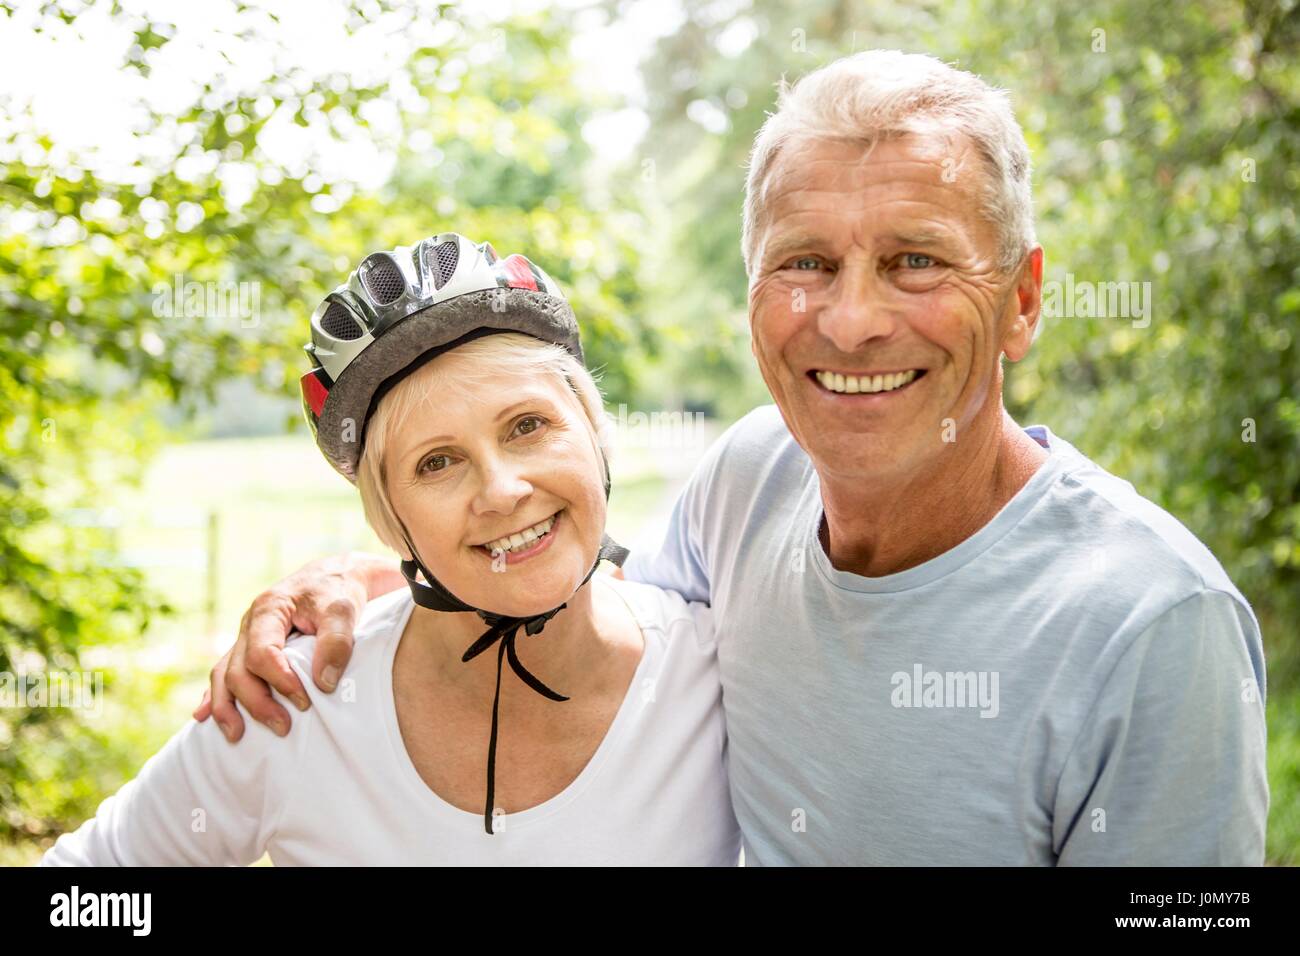 Mature woman wearing bicycle helmet, senior man with arm around her. Stock Photo